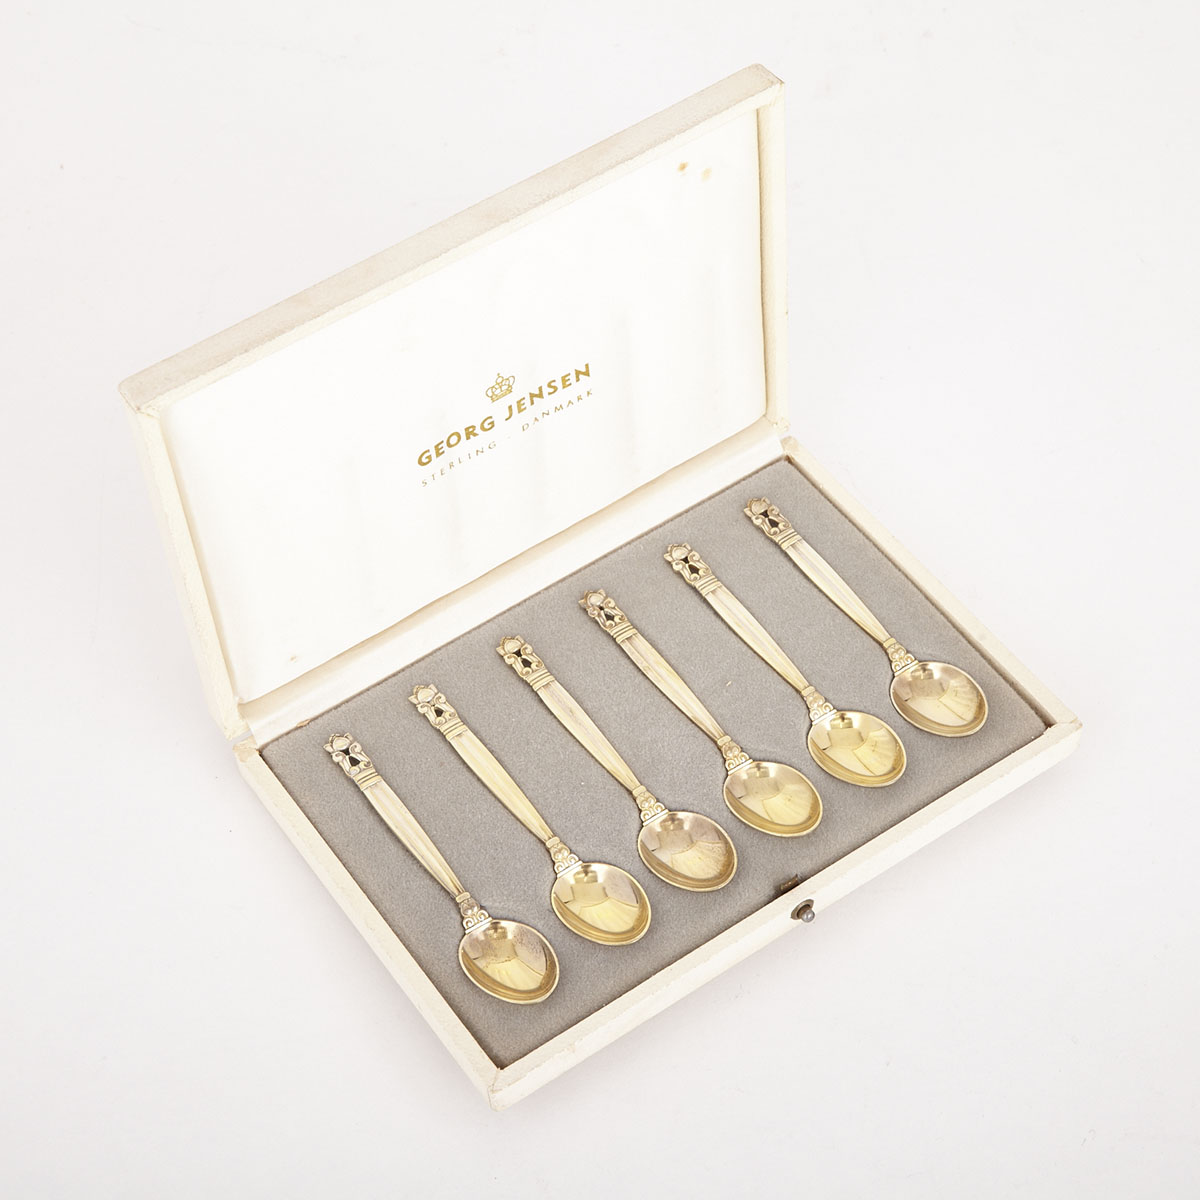 Six Danish Silver-Gilt ‘Acorn’ Pattern Coffee Spoons, Georg Jensen, Copenhagen, 20th century